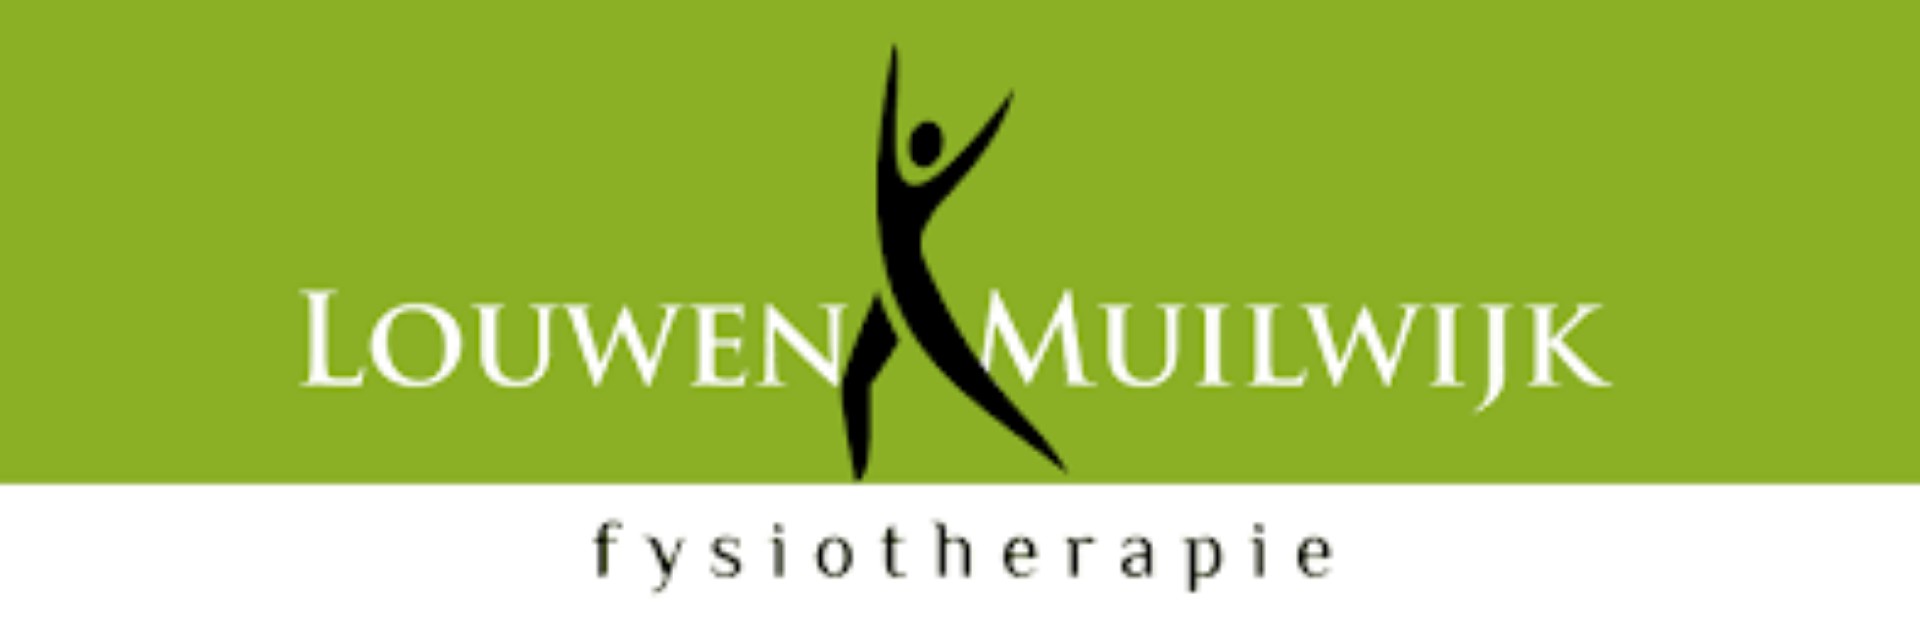 Fysiotherapie Louwen-Muilwijk